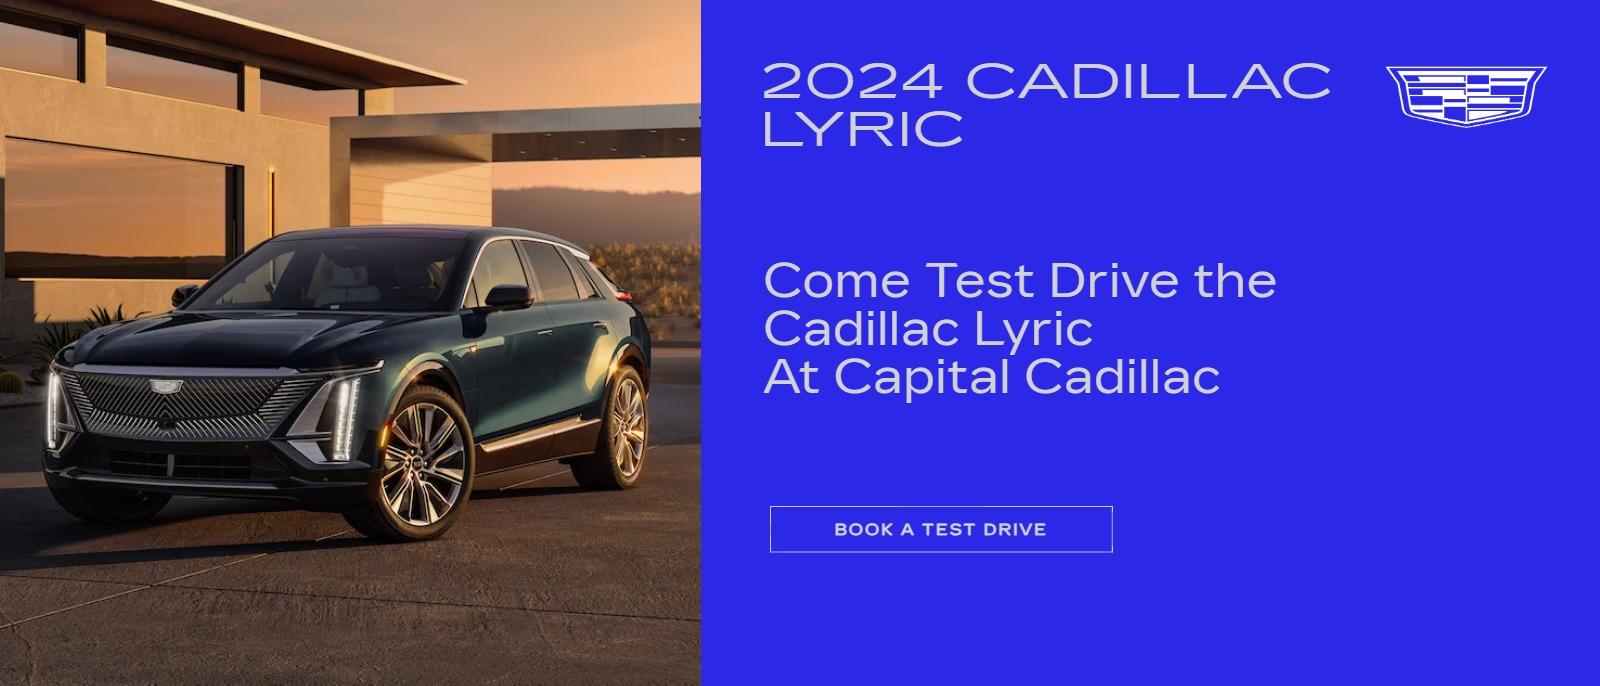 2024 Cadillac Lyriq 
COME TEST DRIVE THE CADILLAC LYRIC
AT CAPITAL CADILLAC